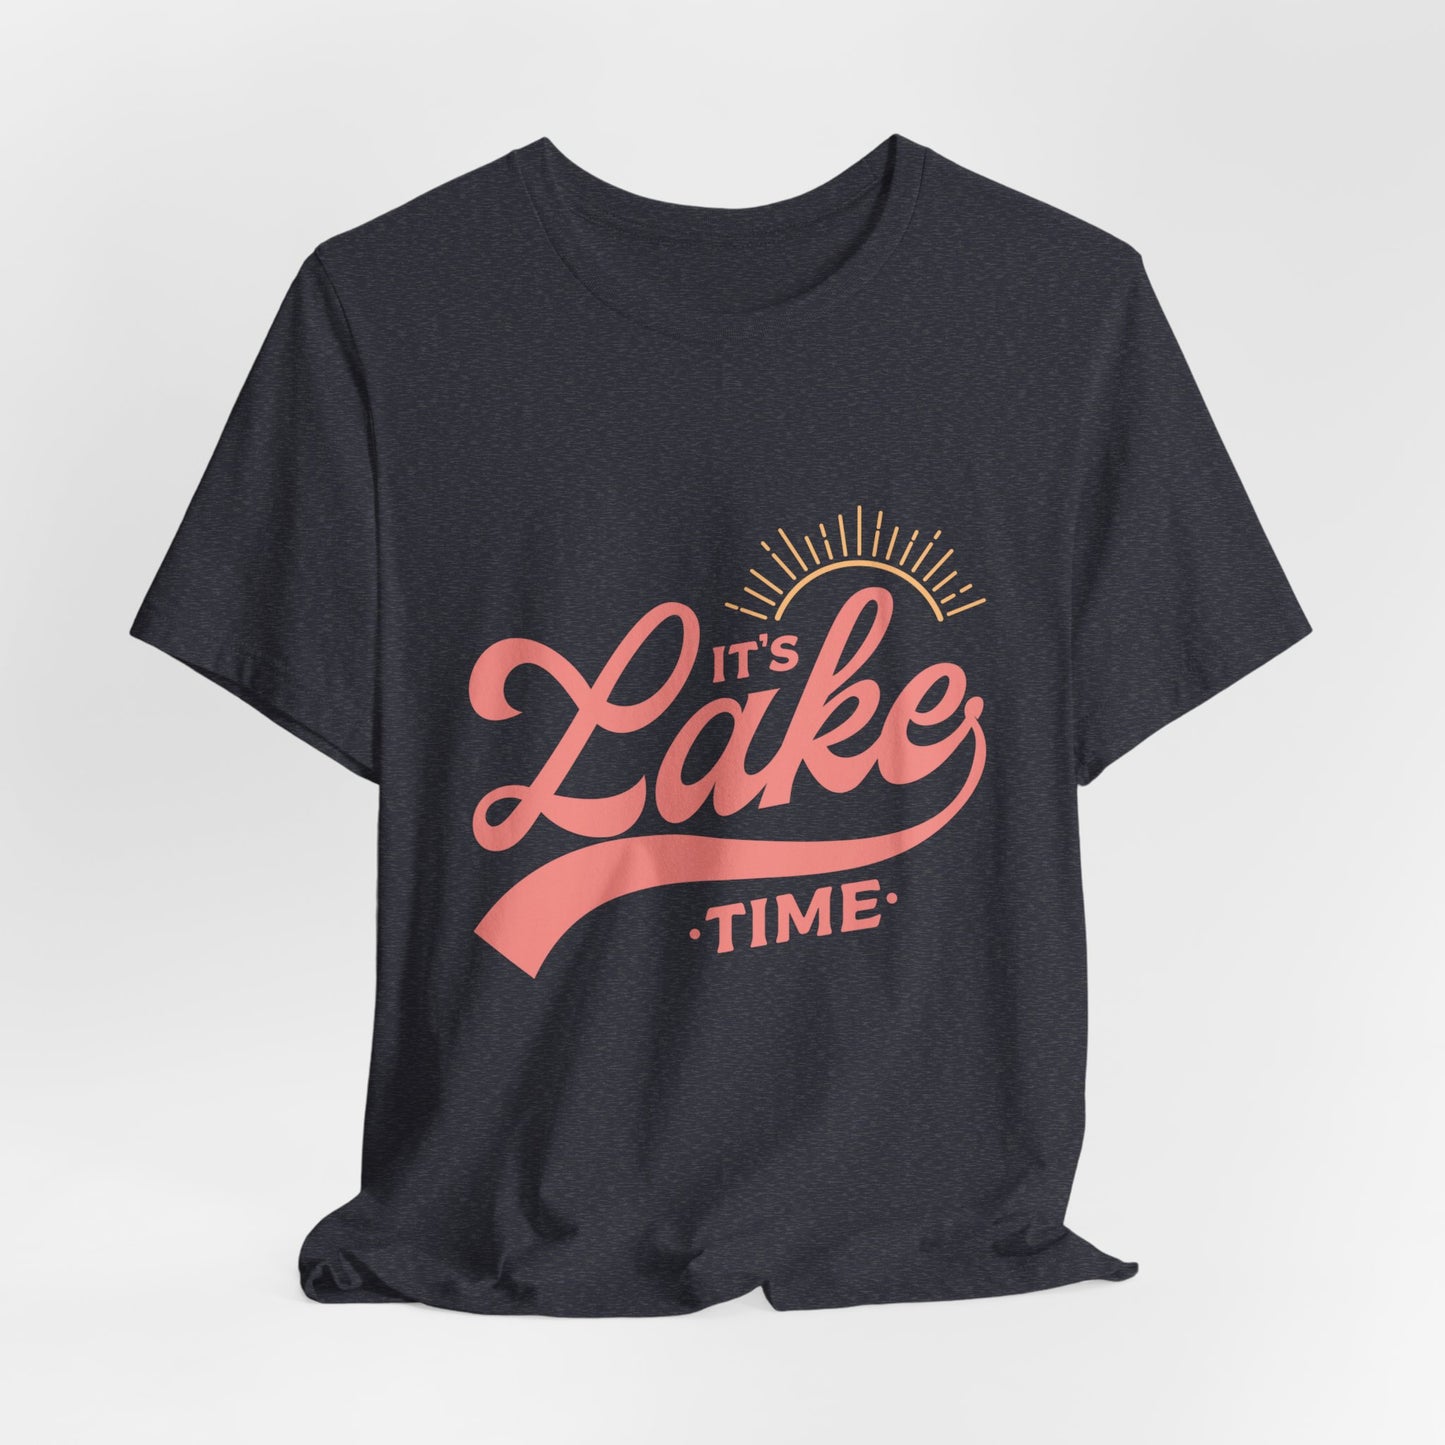 It's Lake Time Women's Short Sleeve Tee